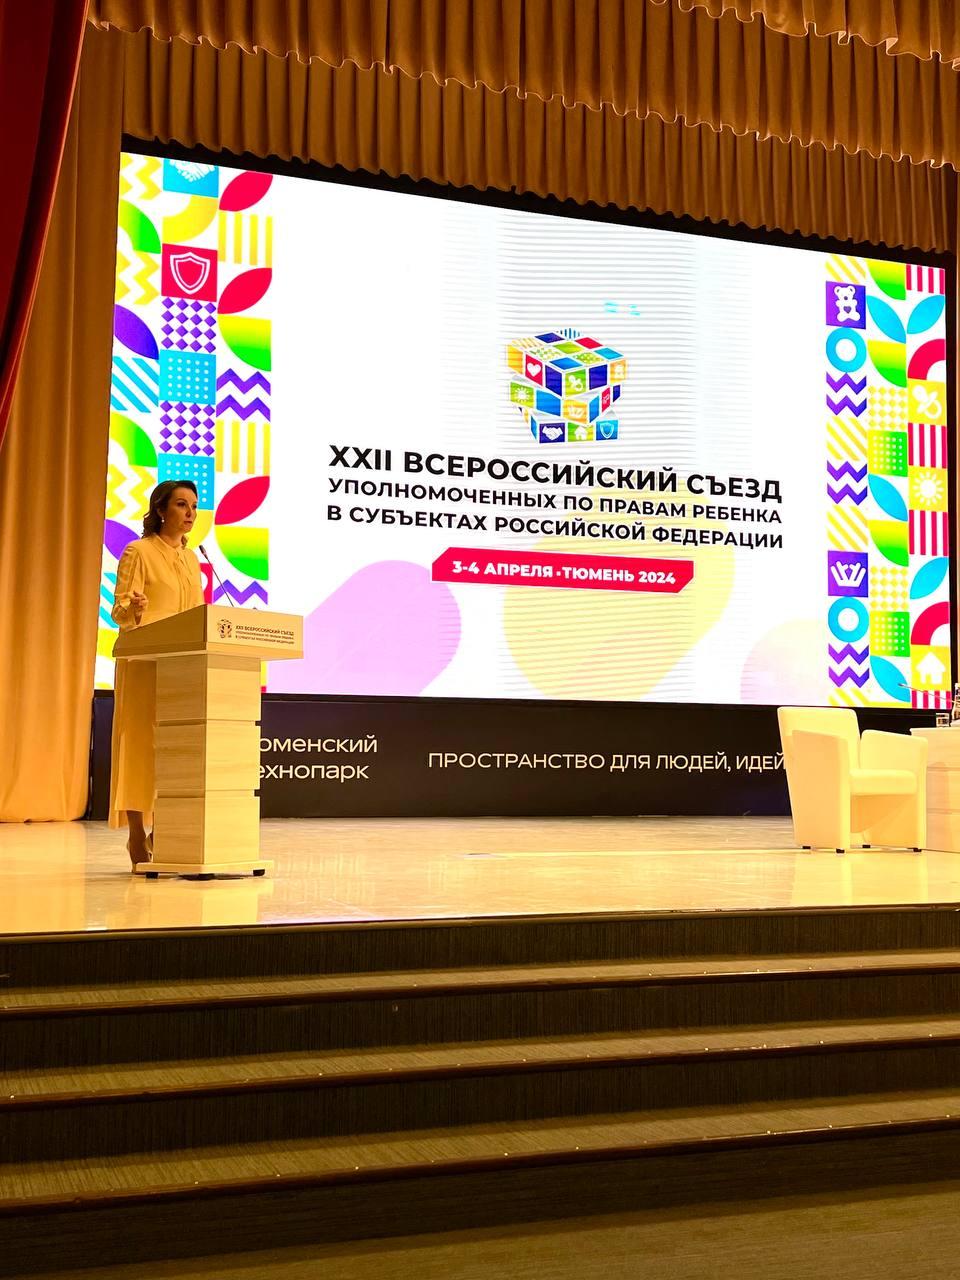 XXII Всероссийский съезд уполномоченных по правам ребенка в субъектах РФ